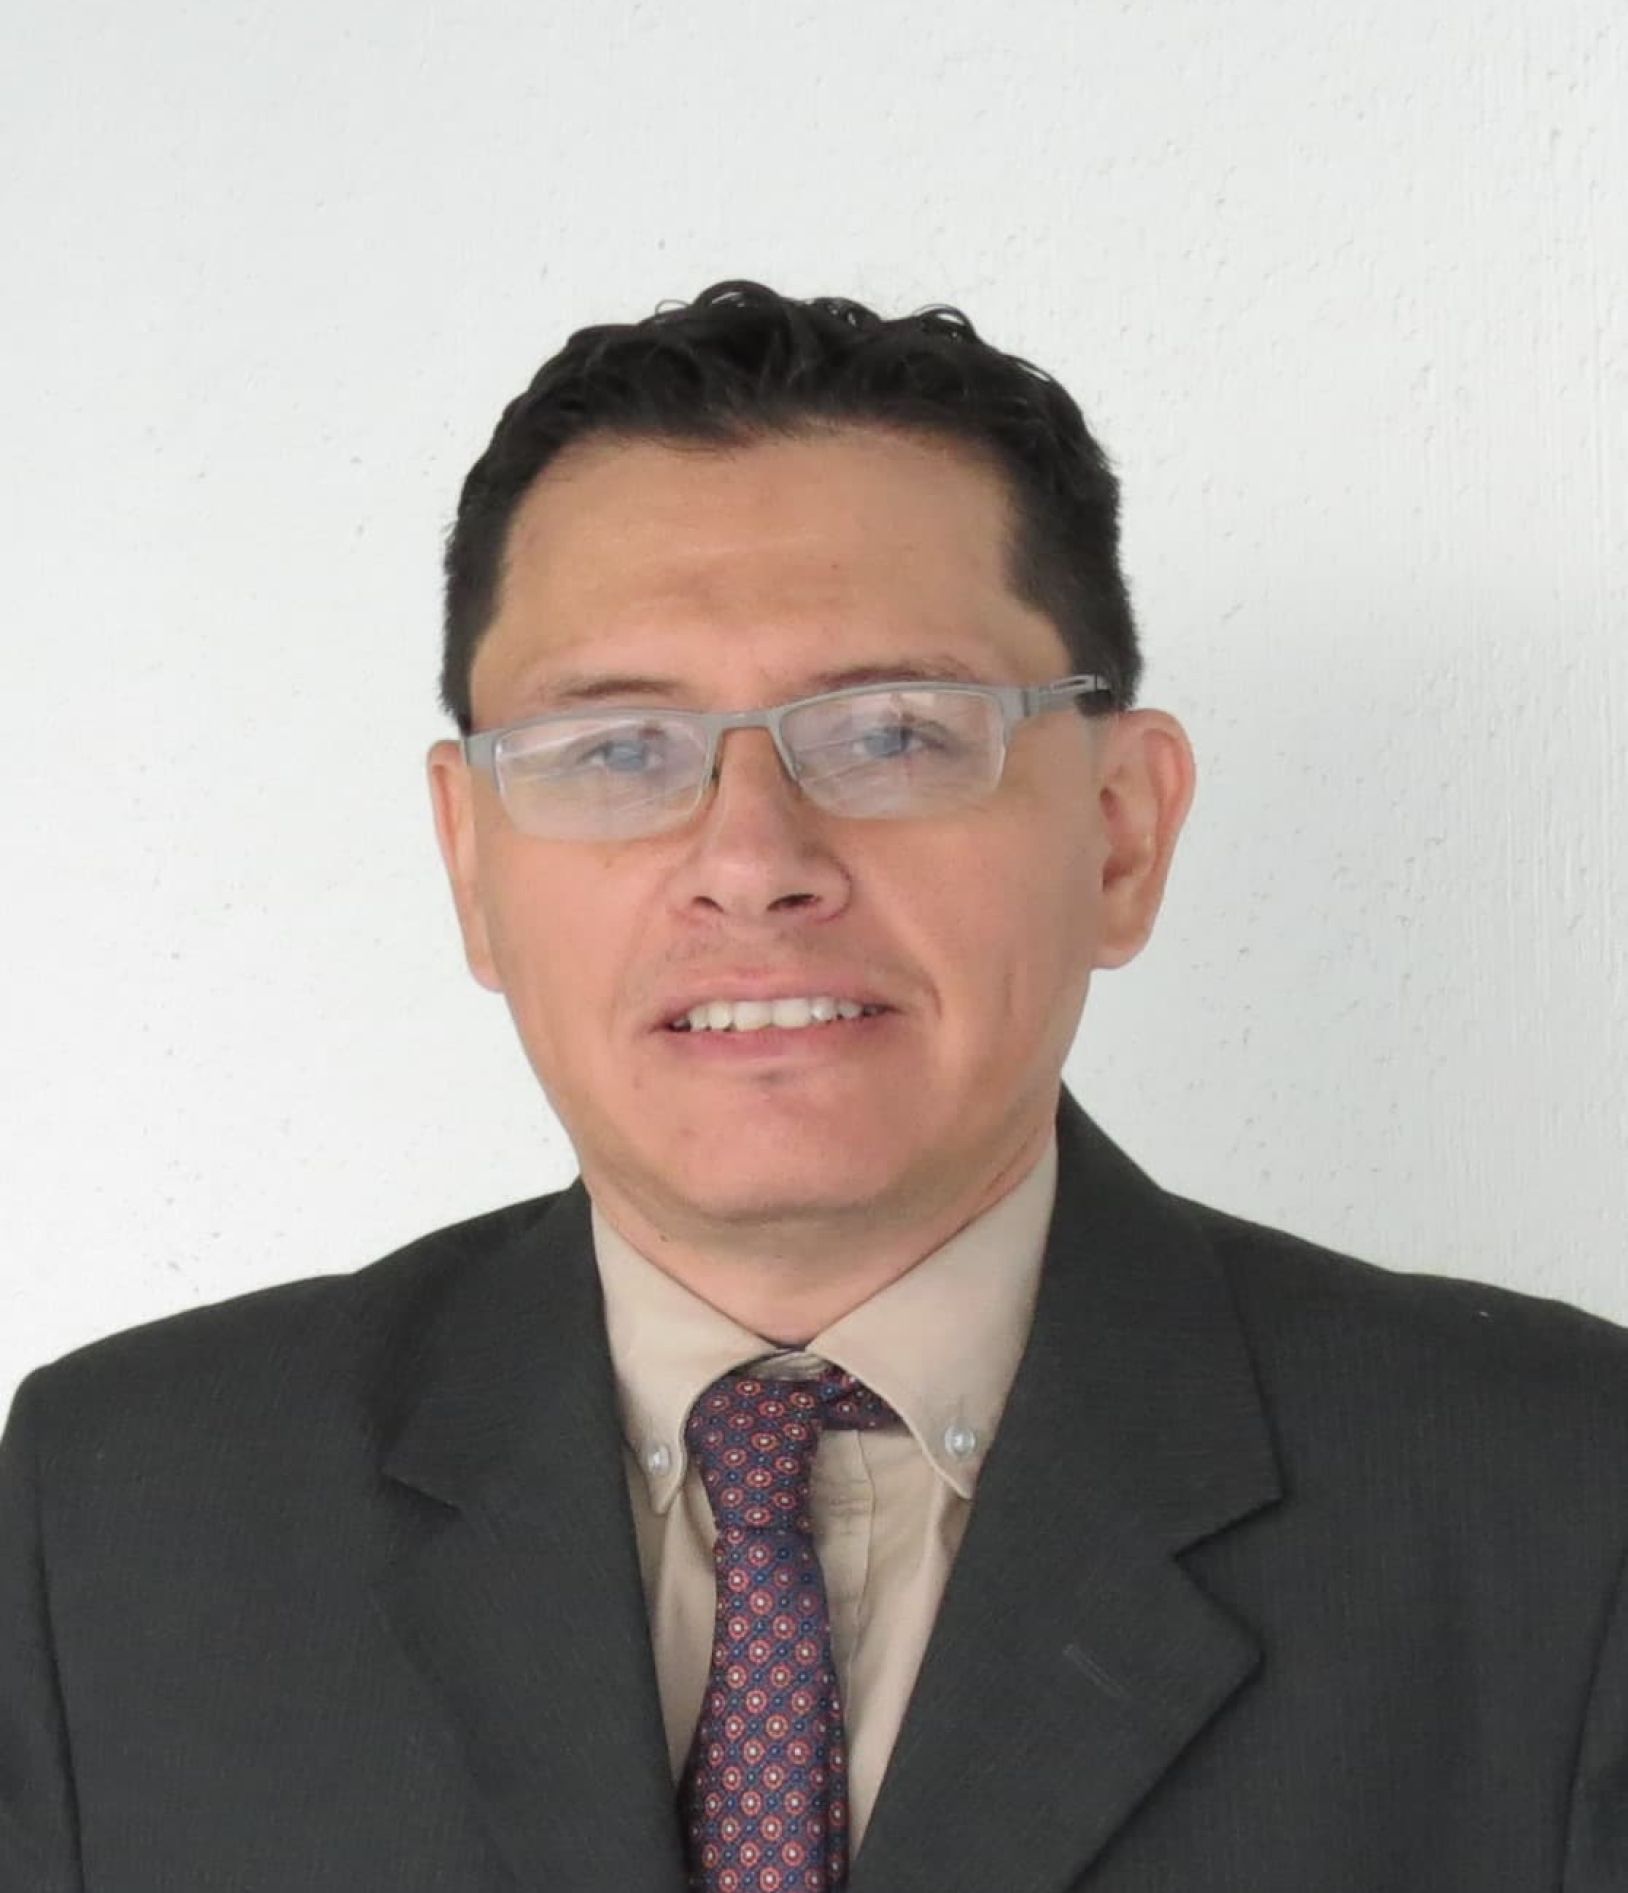 Francisco Rodríguez